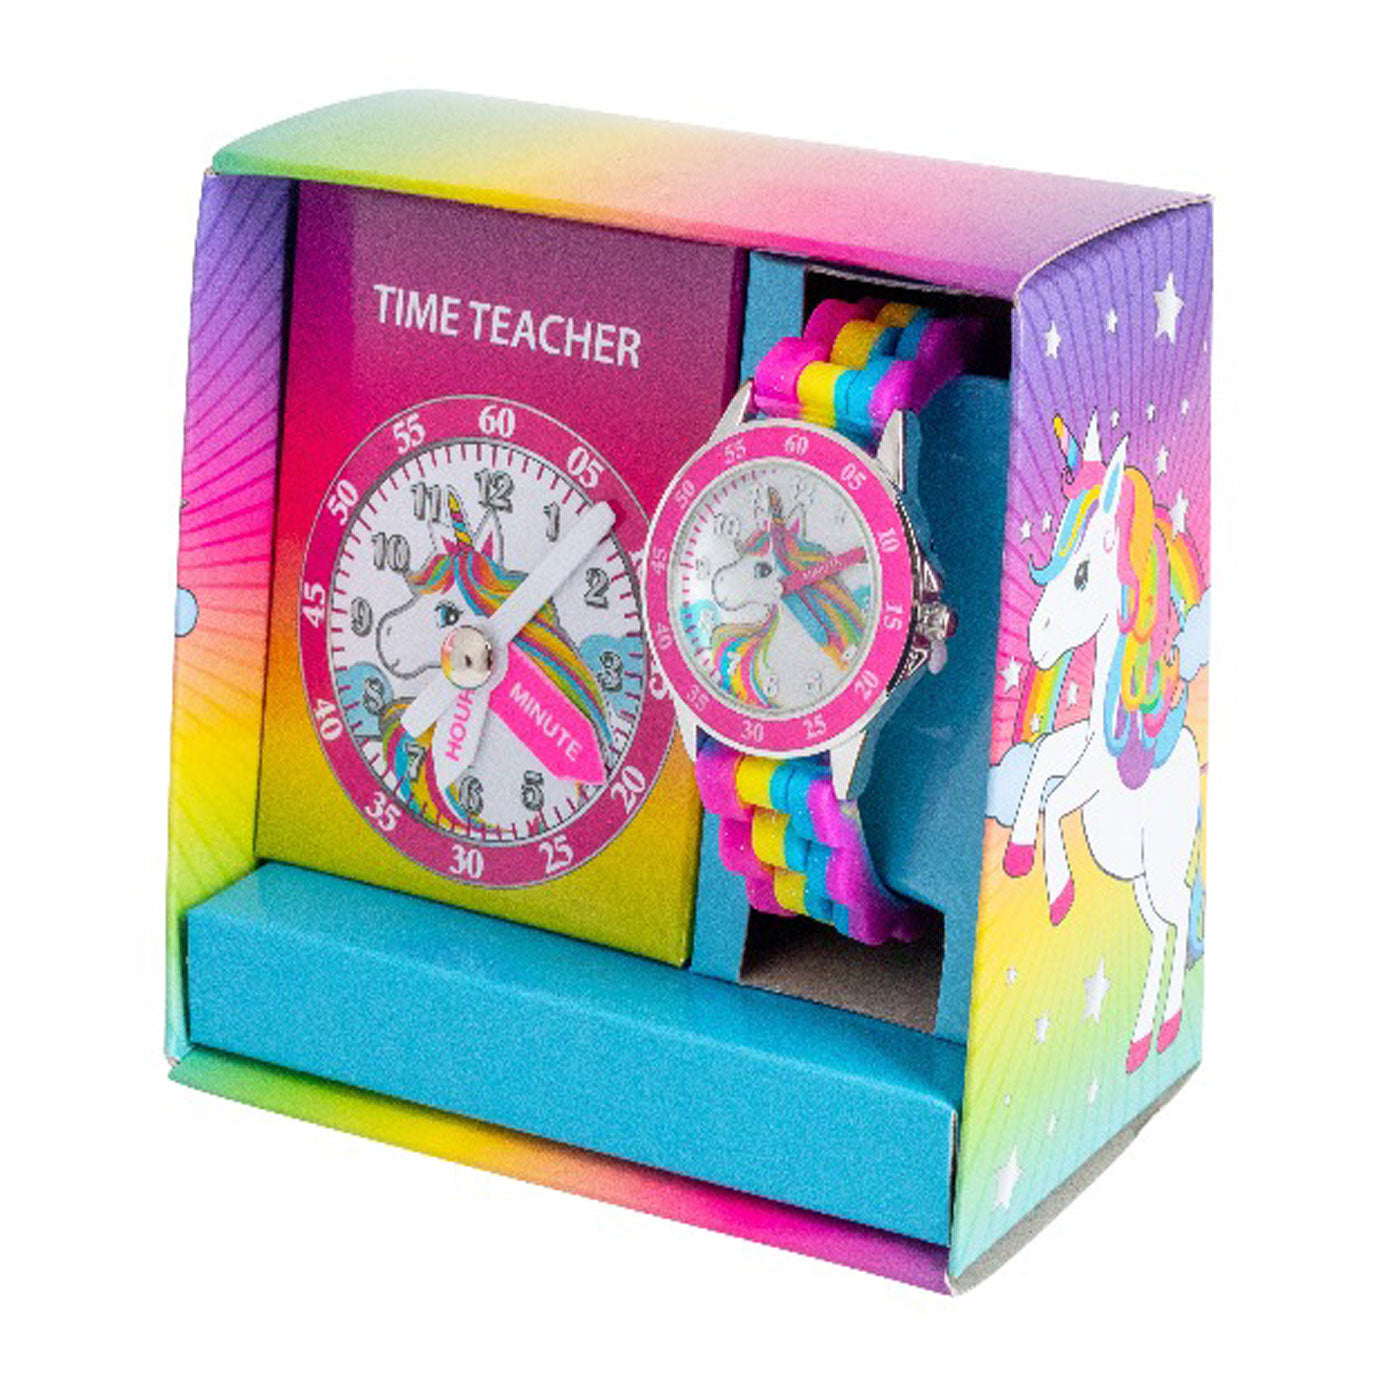 Time Teacher Unicorn Watch